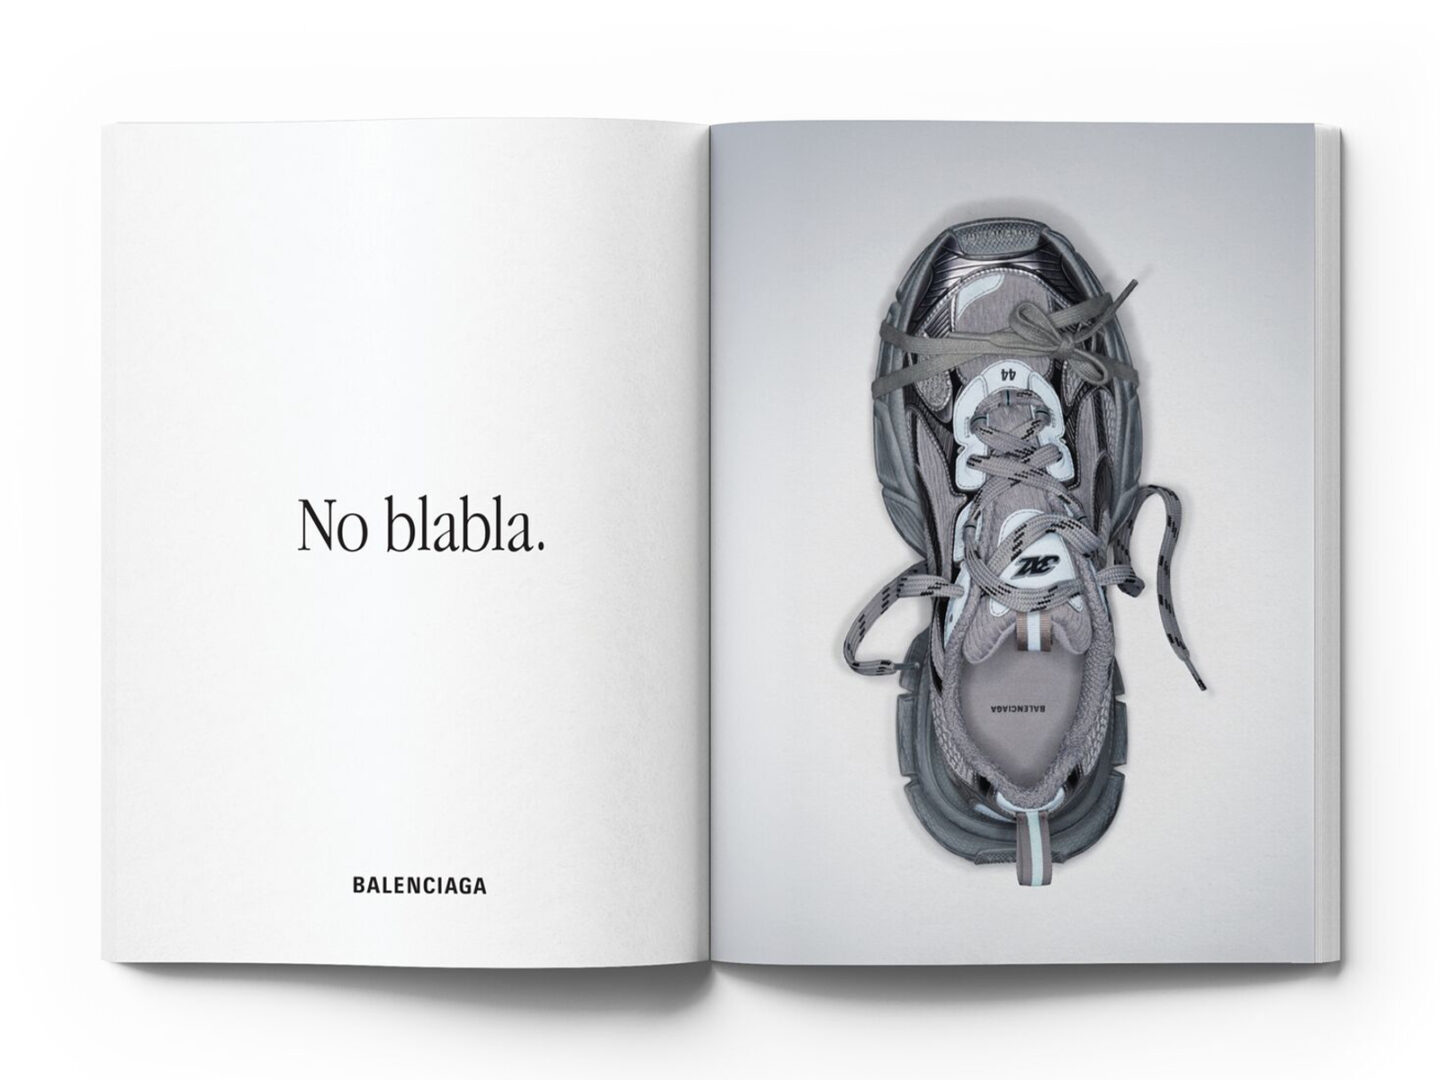 ‘It’s different’: Balenciaga’s ironic campaign